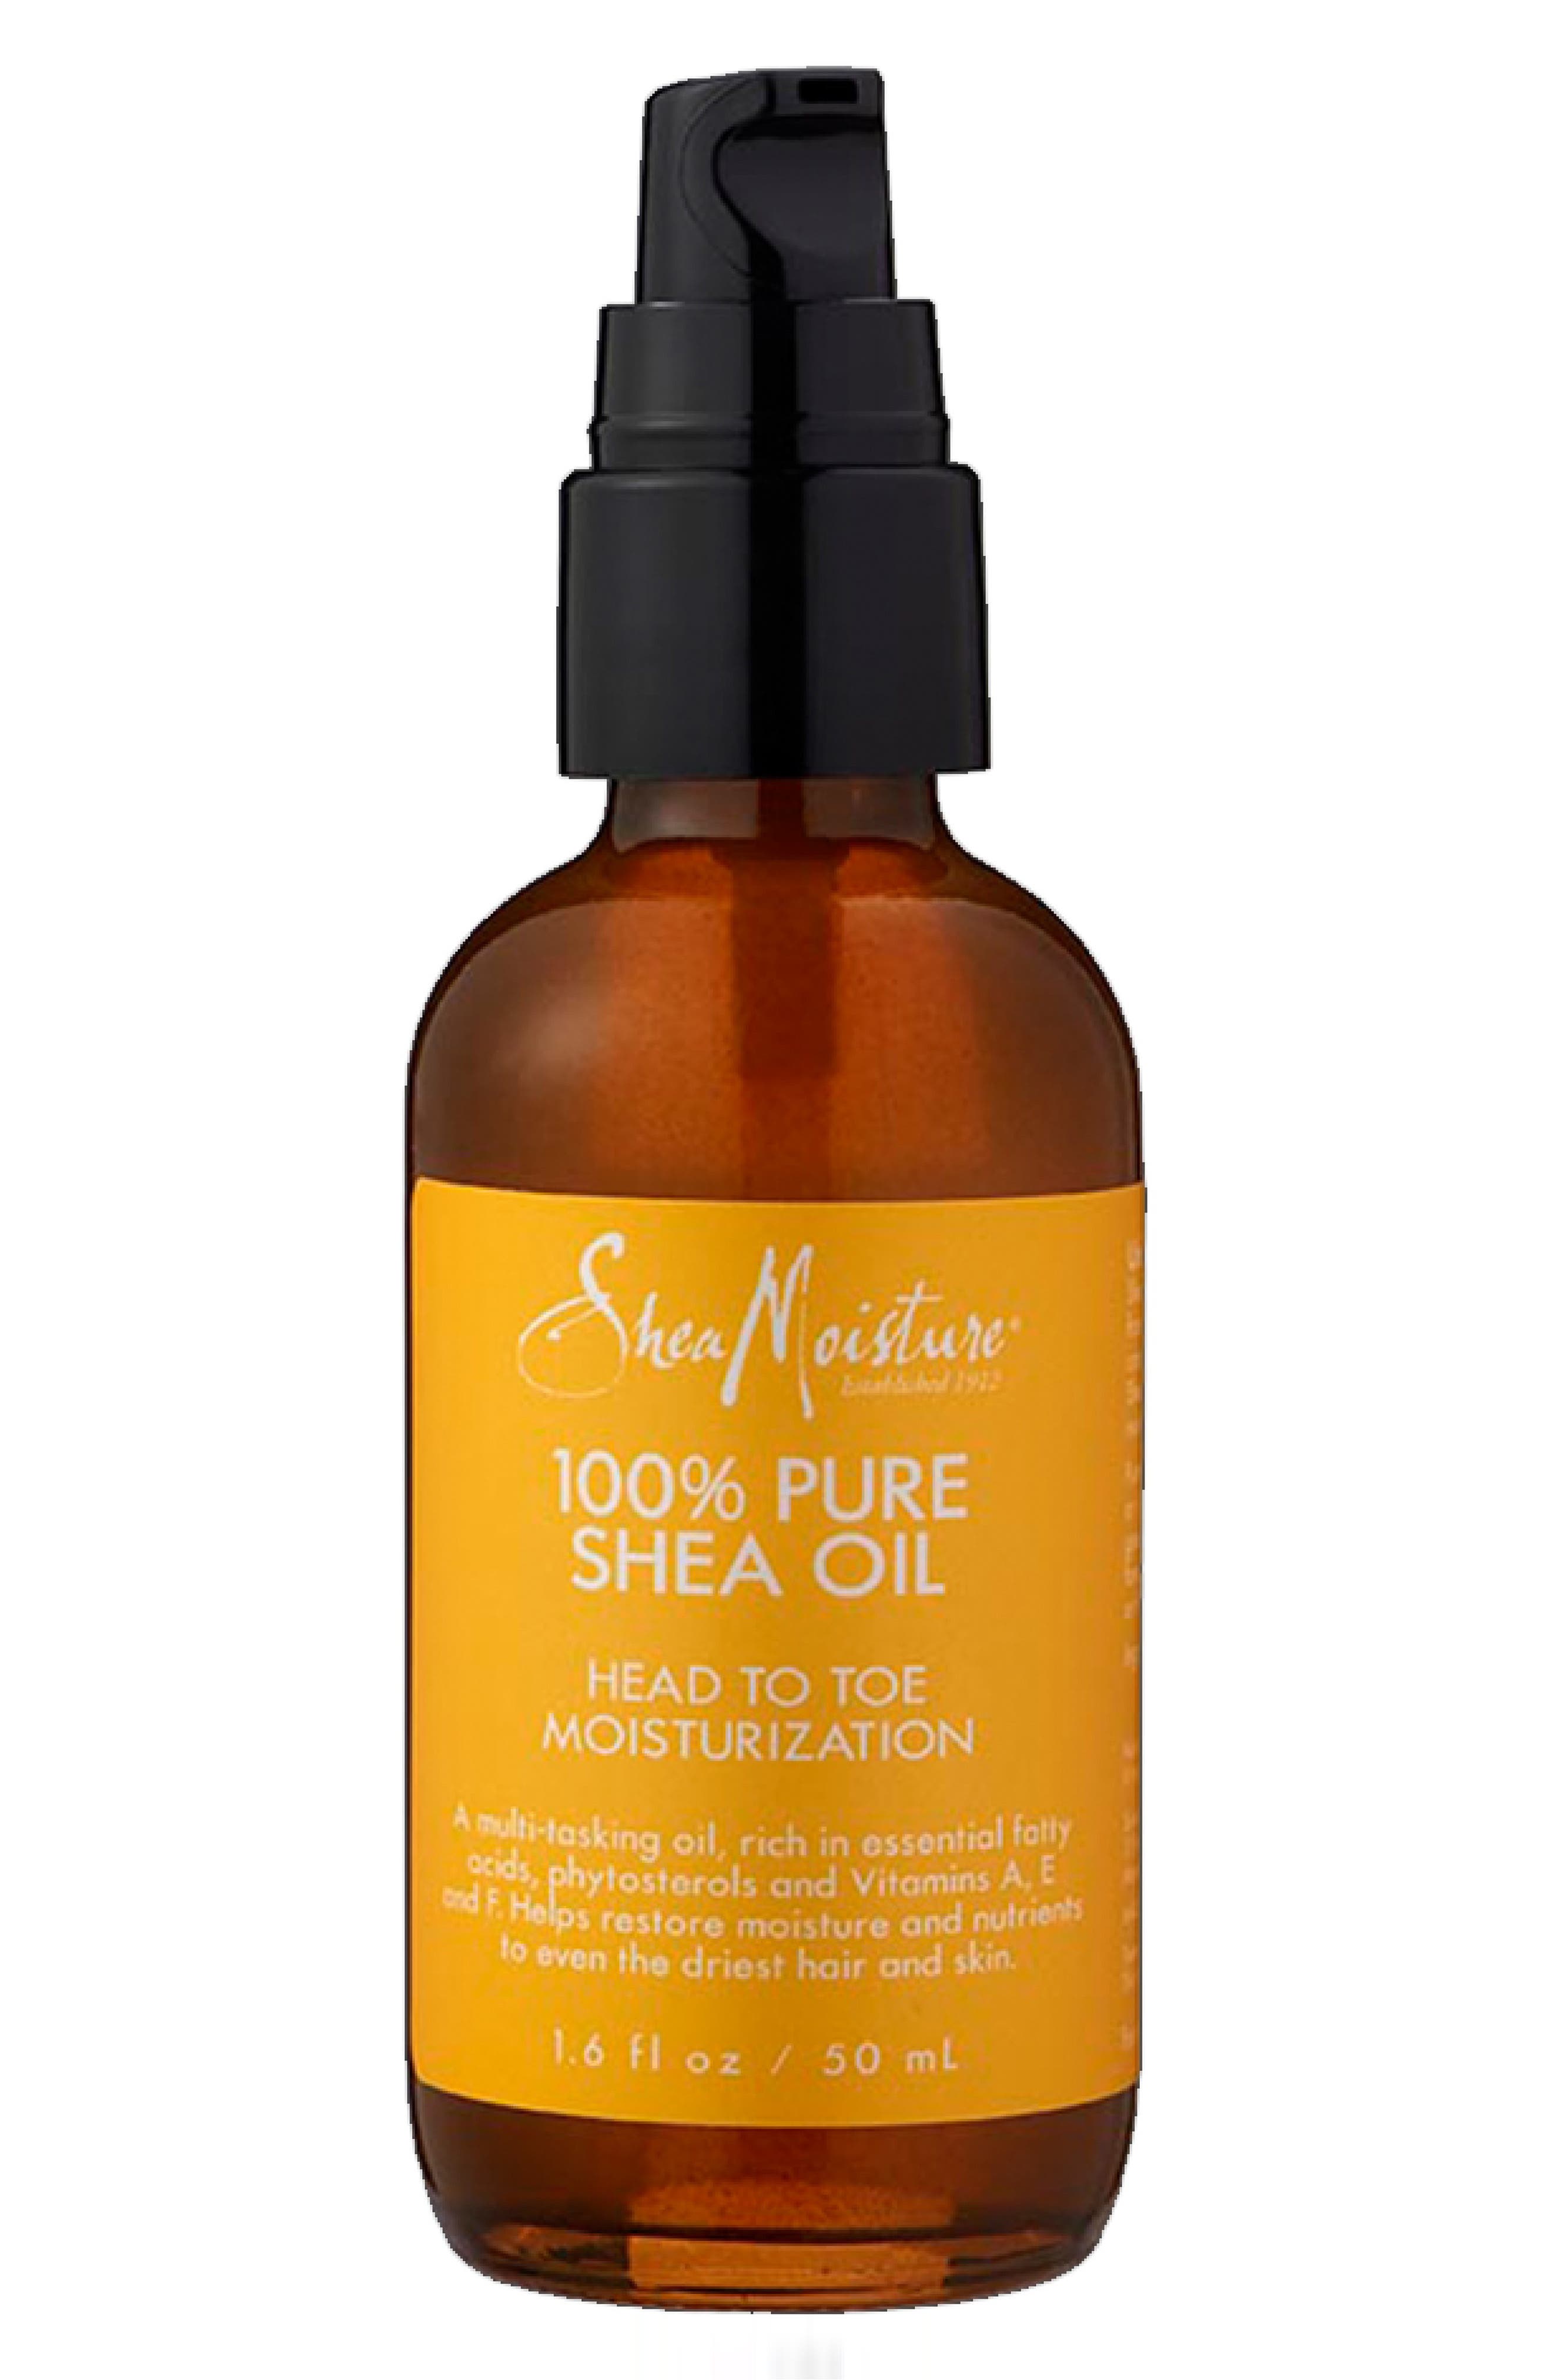 100% Pure Shea Oil - 1.6 fl. oz. She